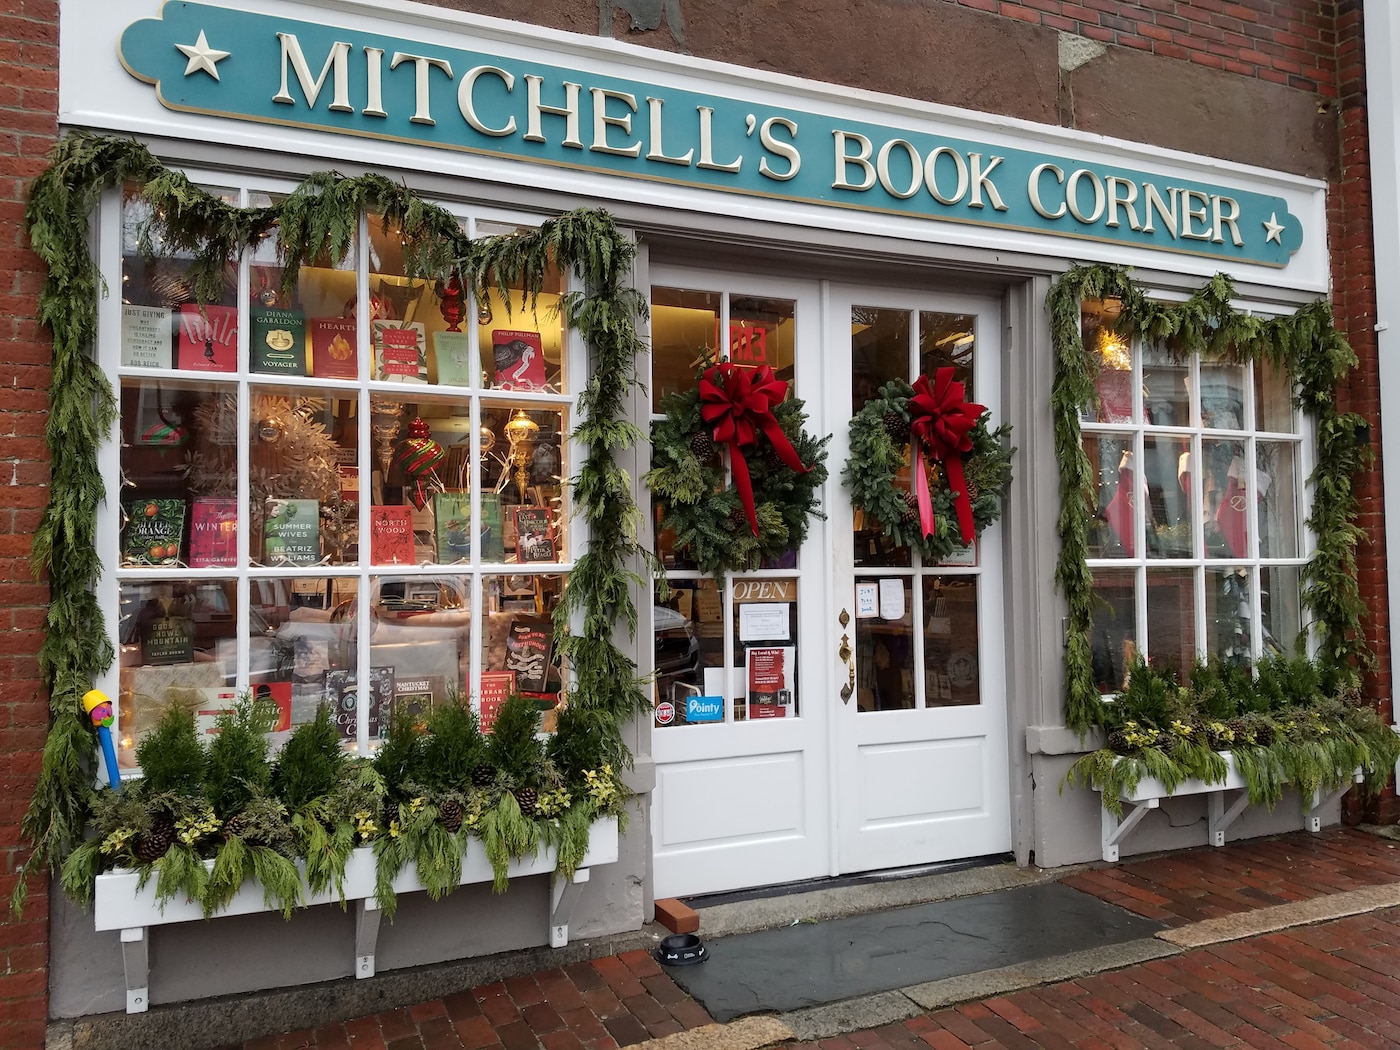 Mitchell's Book Corner on Nantucket